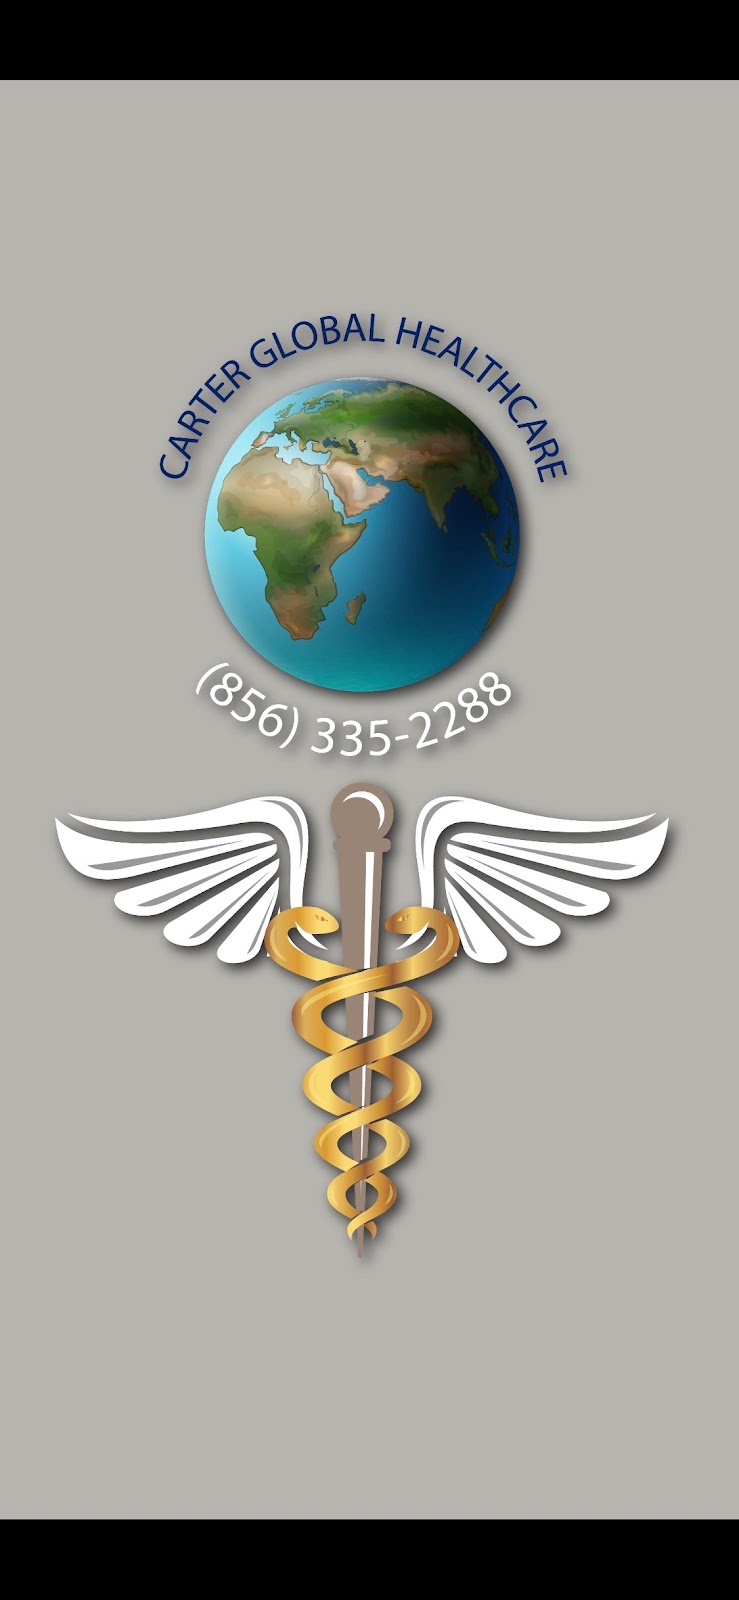 Carter Medical Associates | 321 E Broad St, Gibbstown, NJ 08027 | Phone: (856) 335-2288